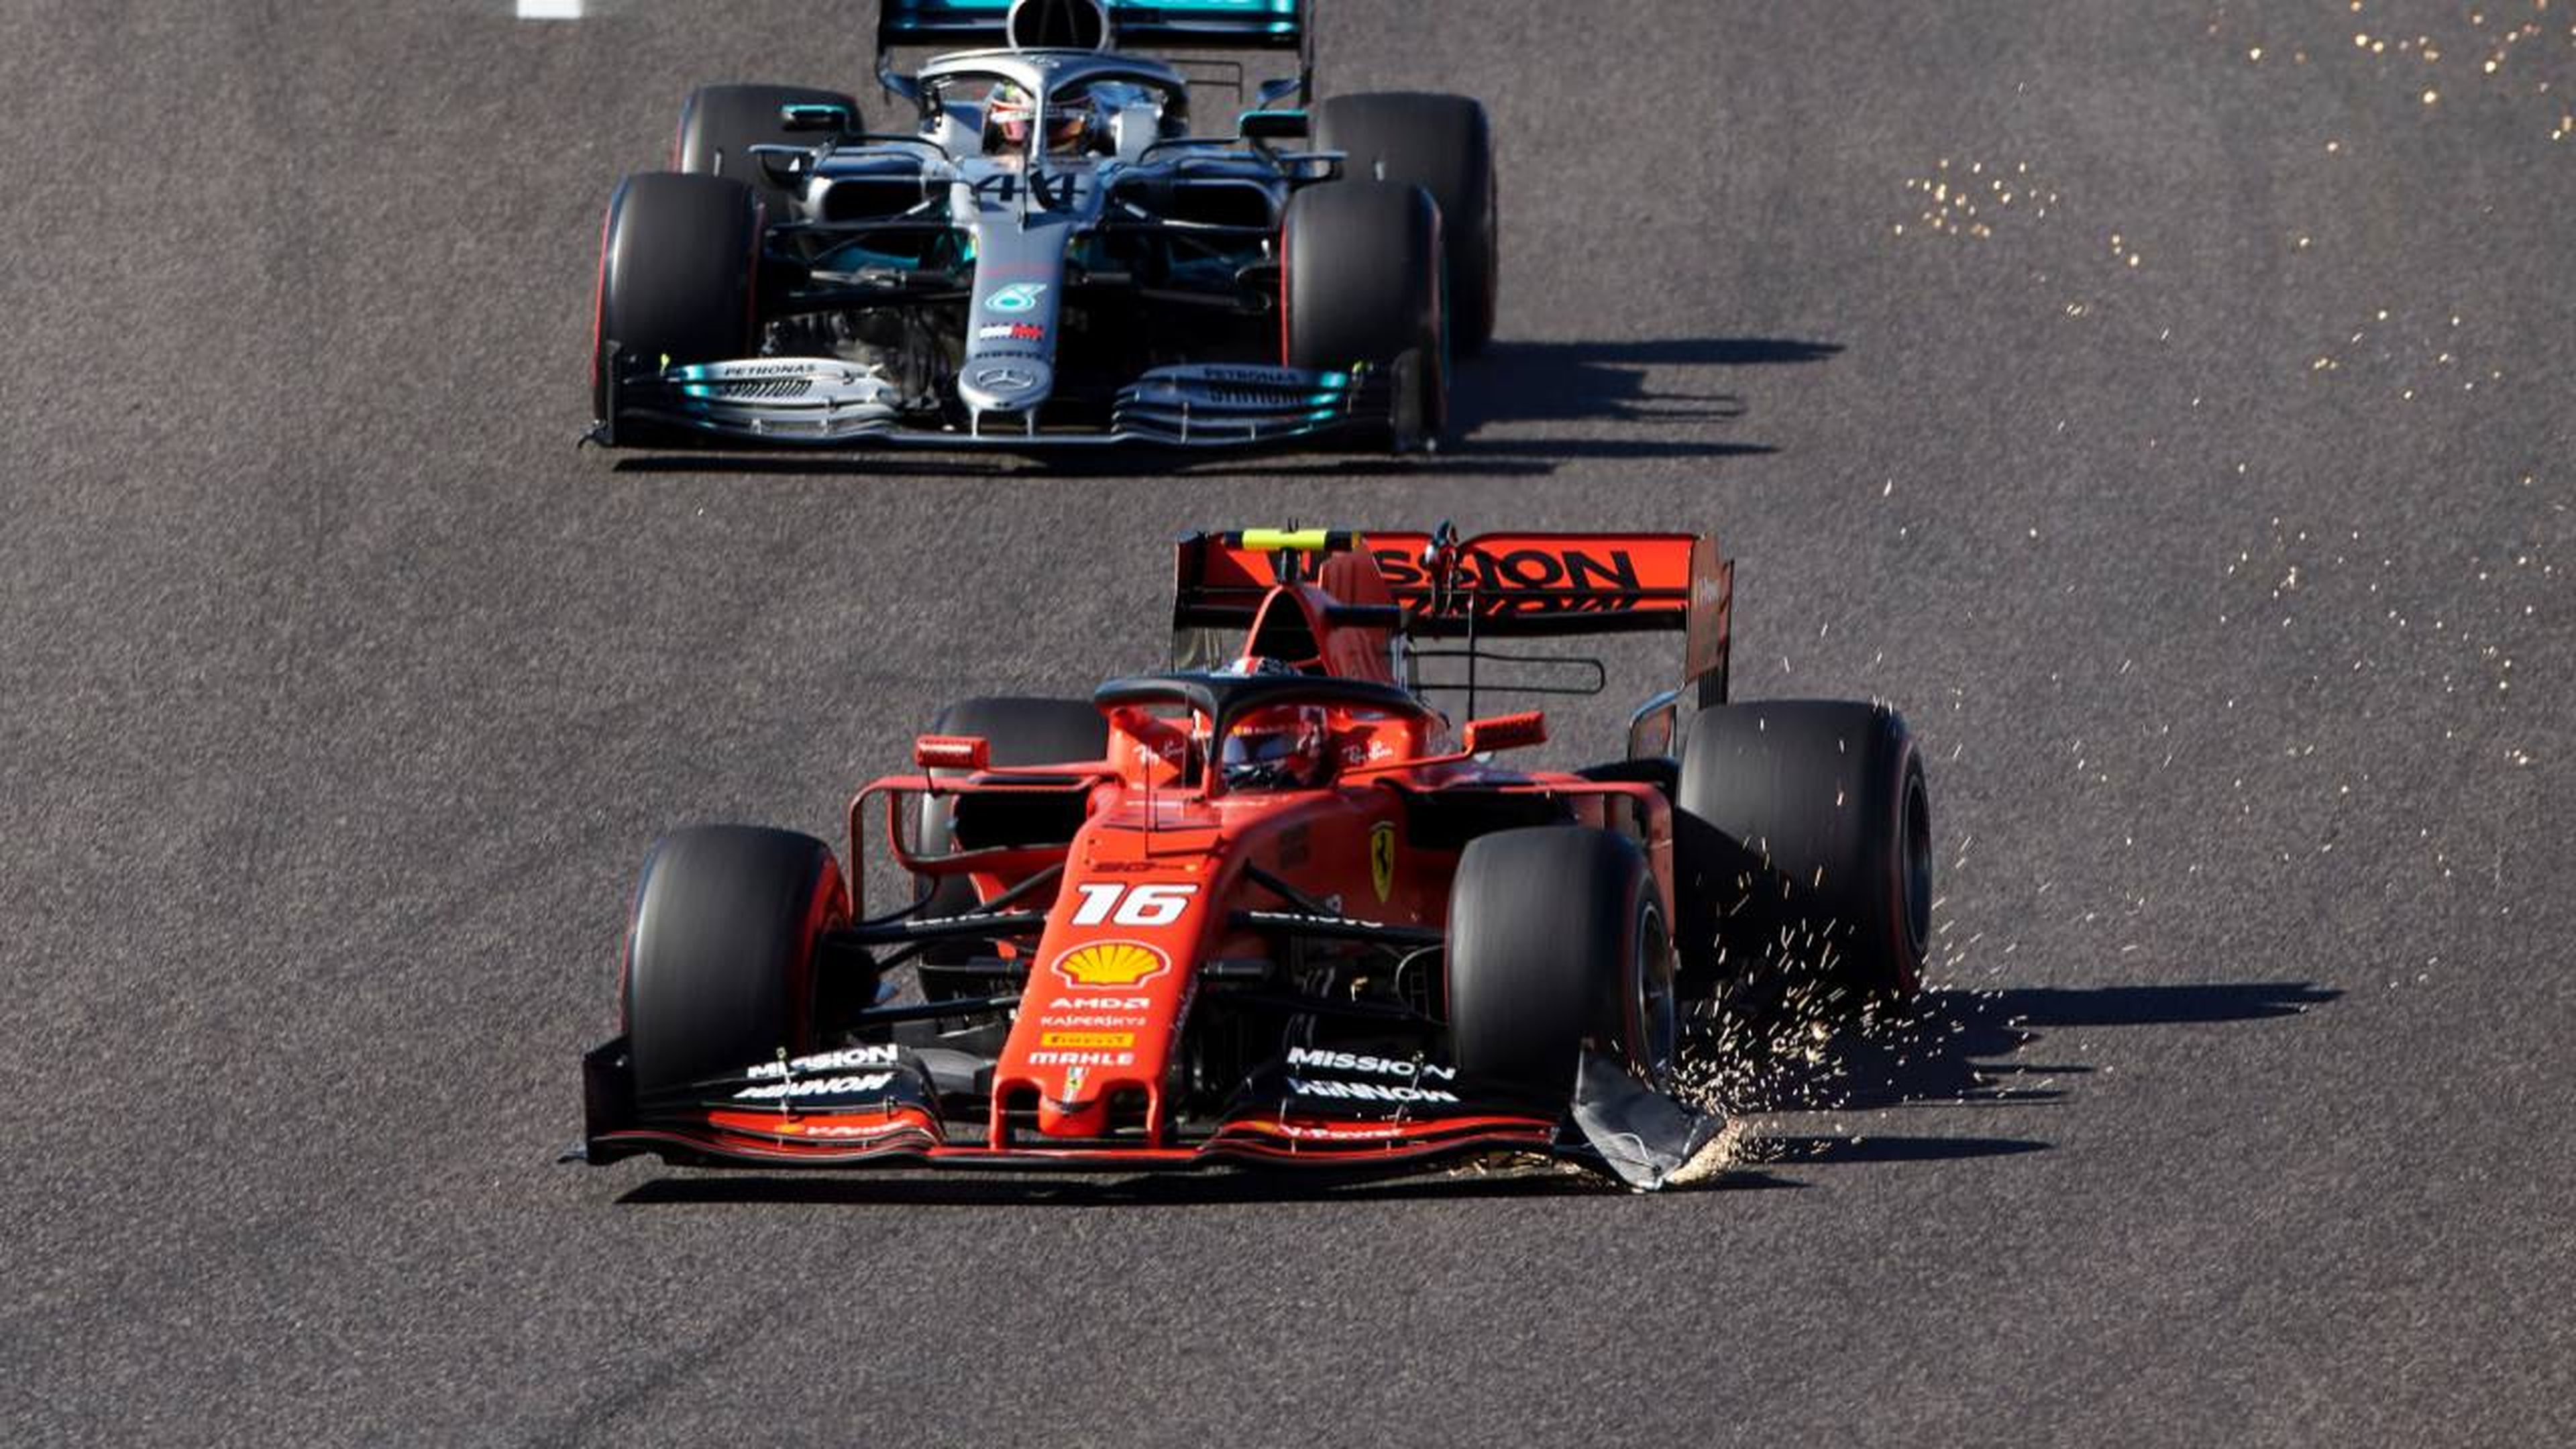 Charles Leclerc y Lewis Hamilton